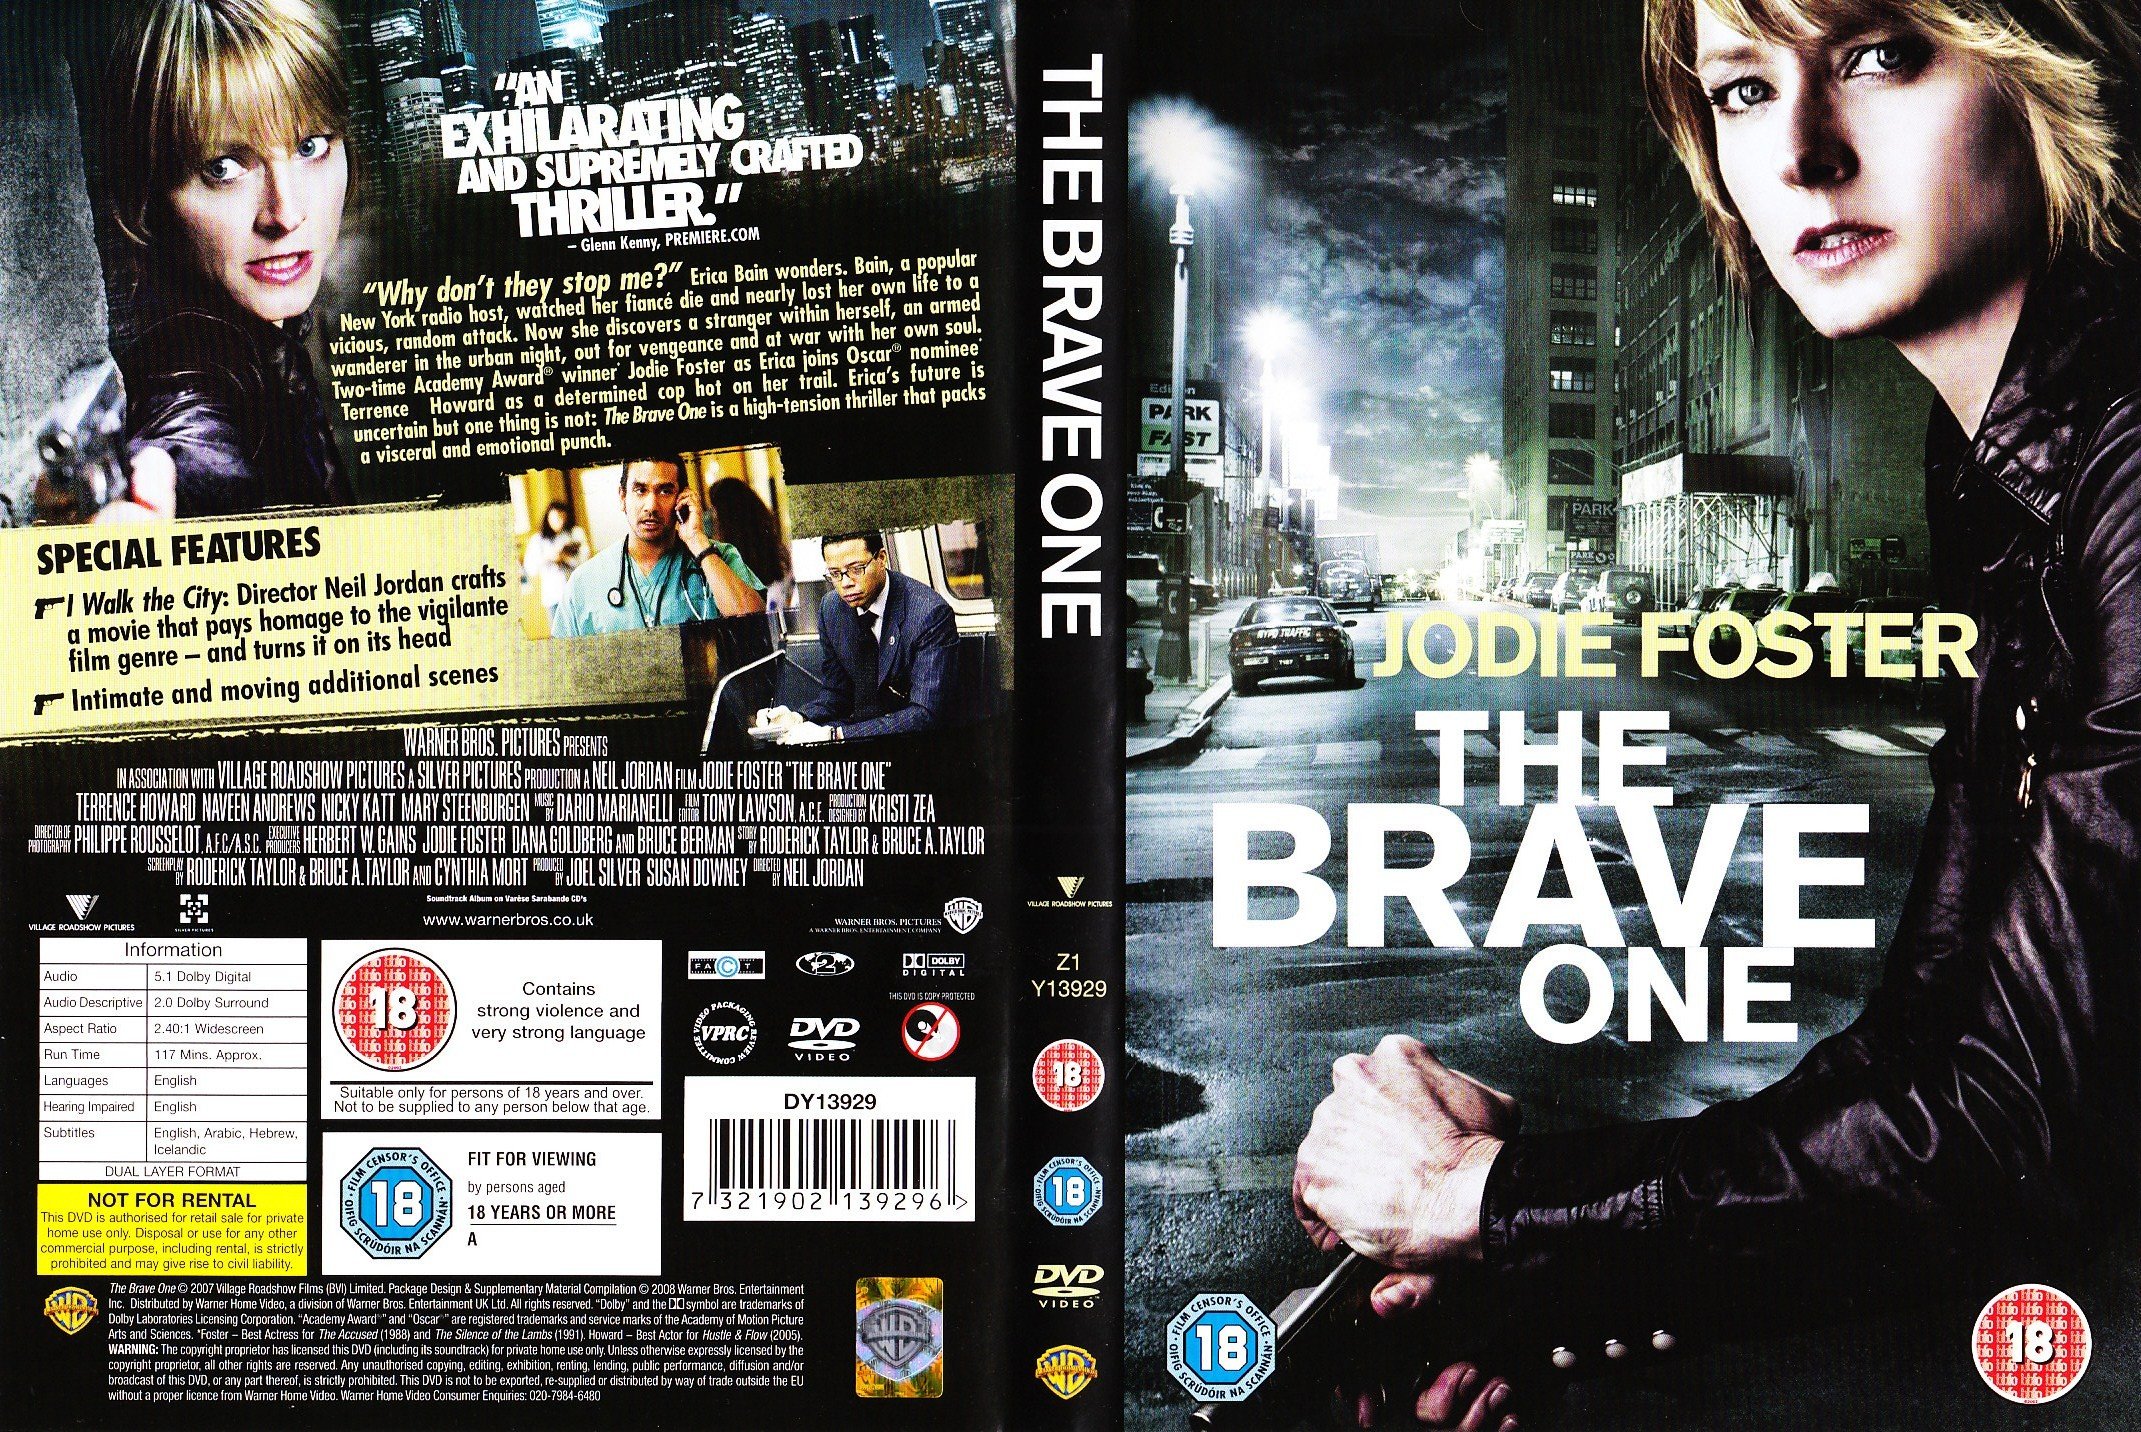 HD DVD - The Brave One [2007] - Warner Bros. - UK